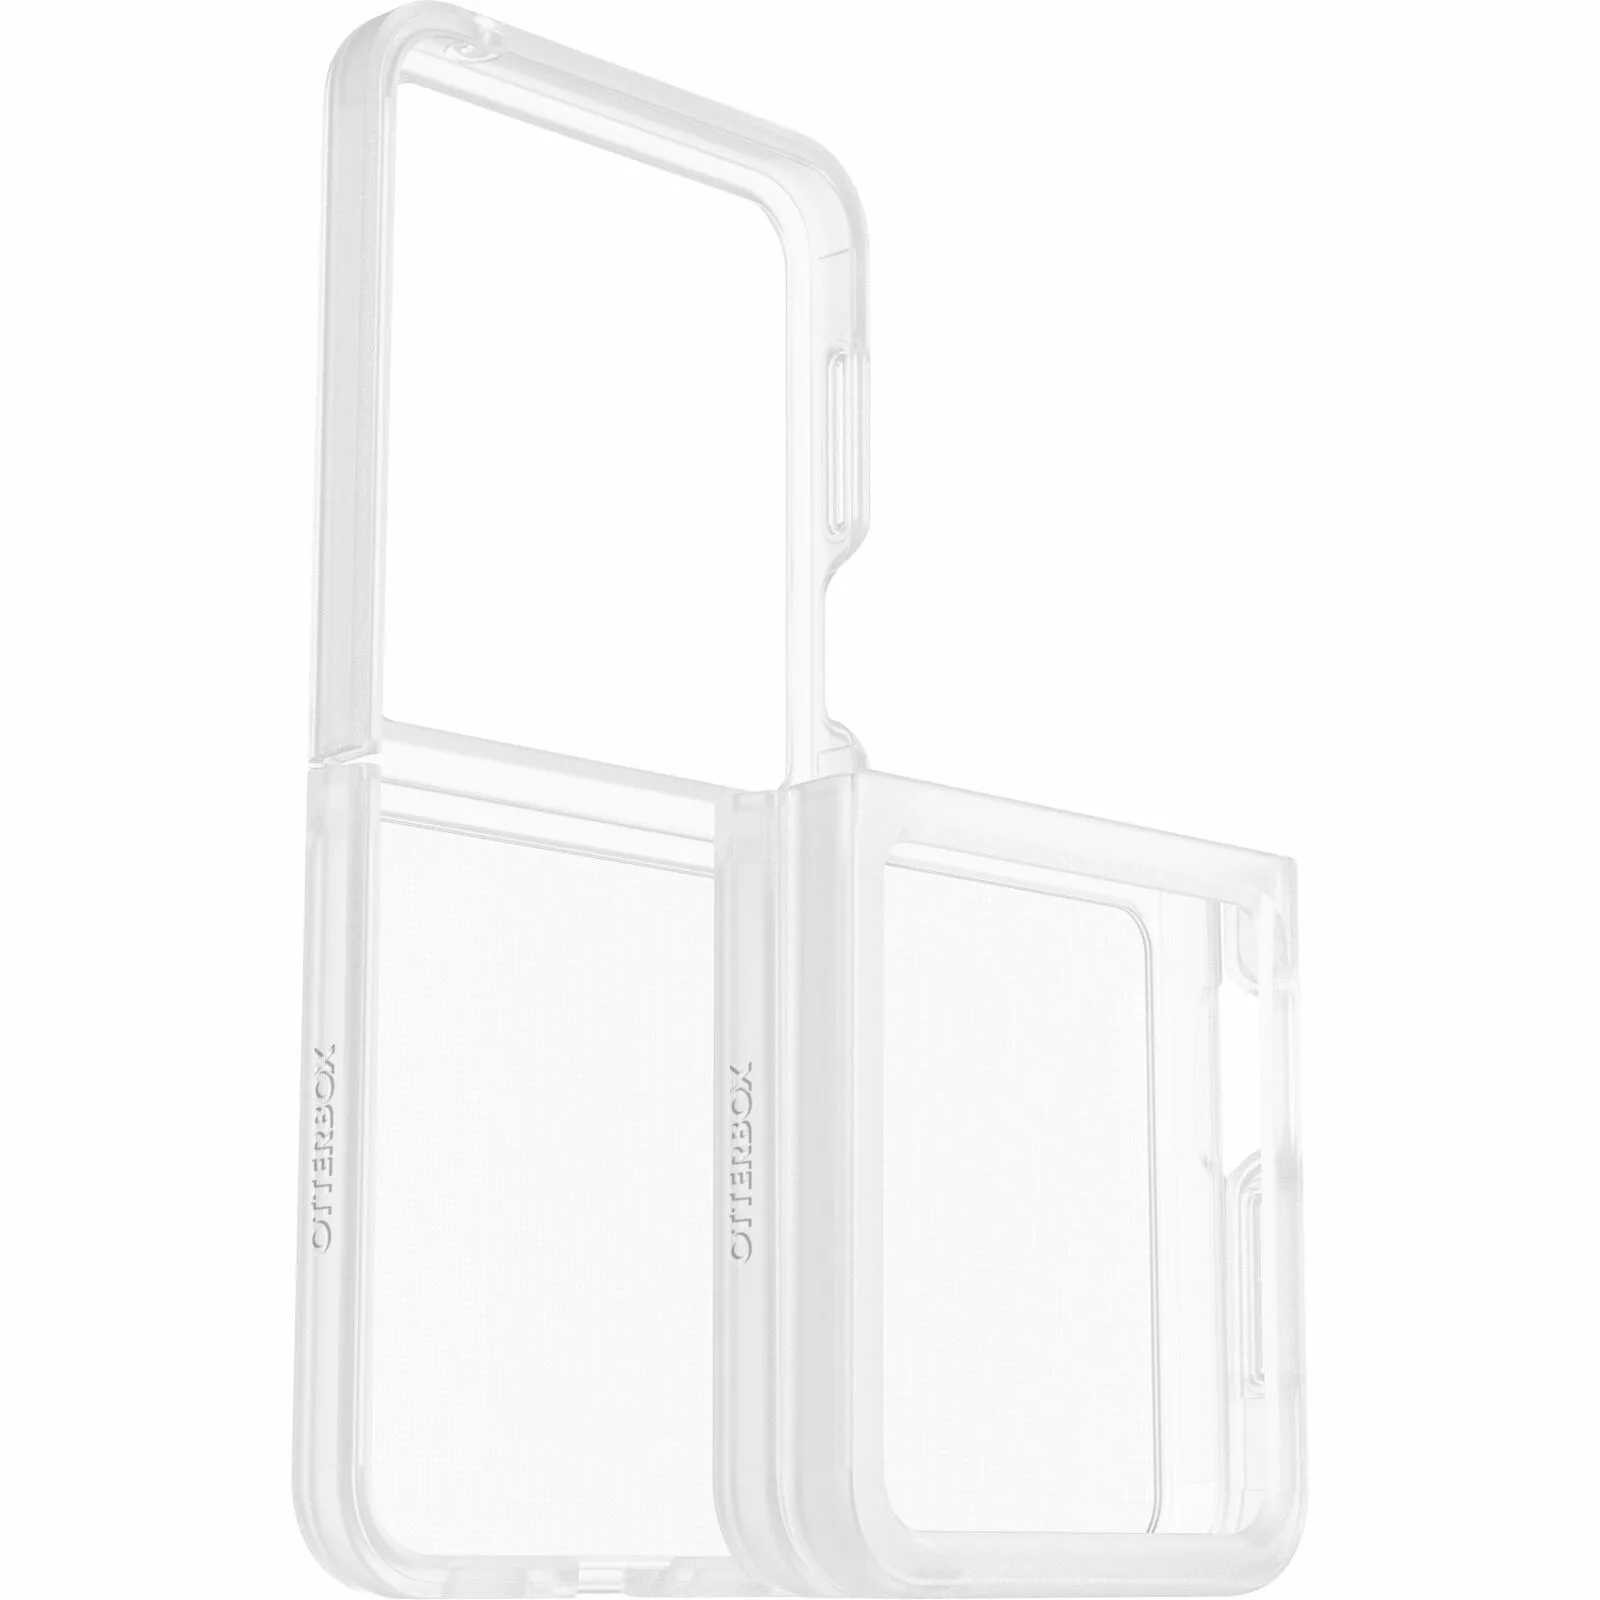 Otterbox รุ่น Thin Flex - เคส Galaxy Z Flip 5 - สี Clear